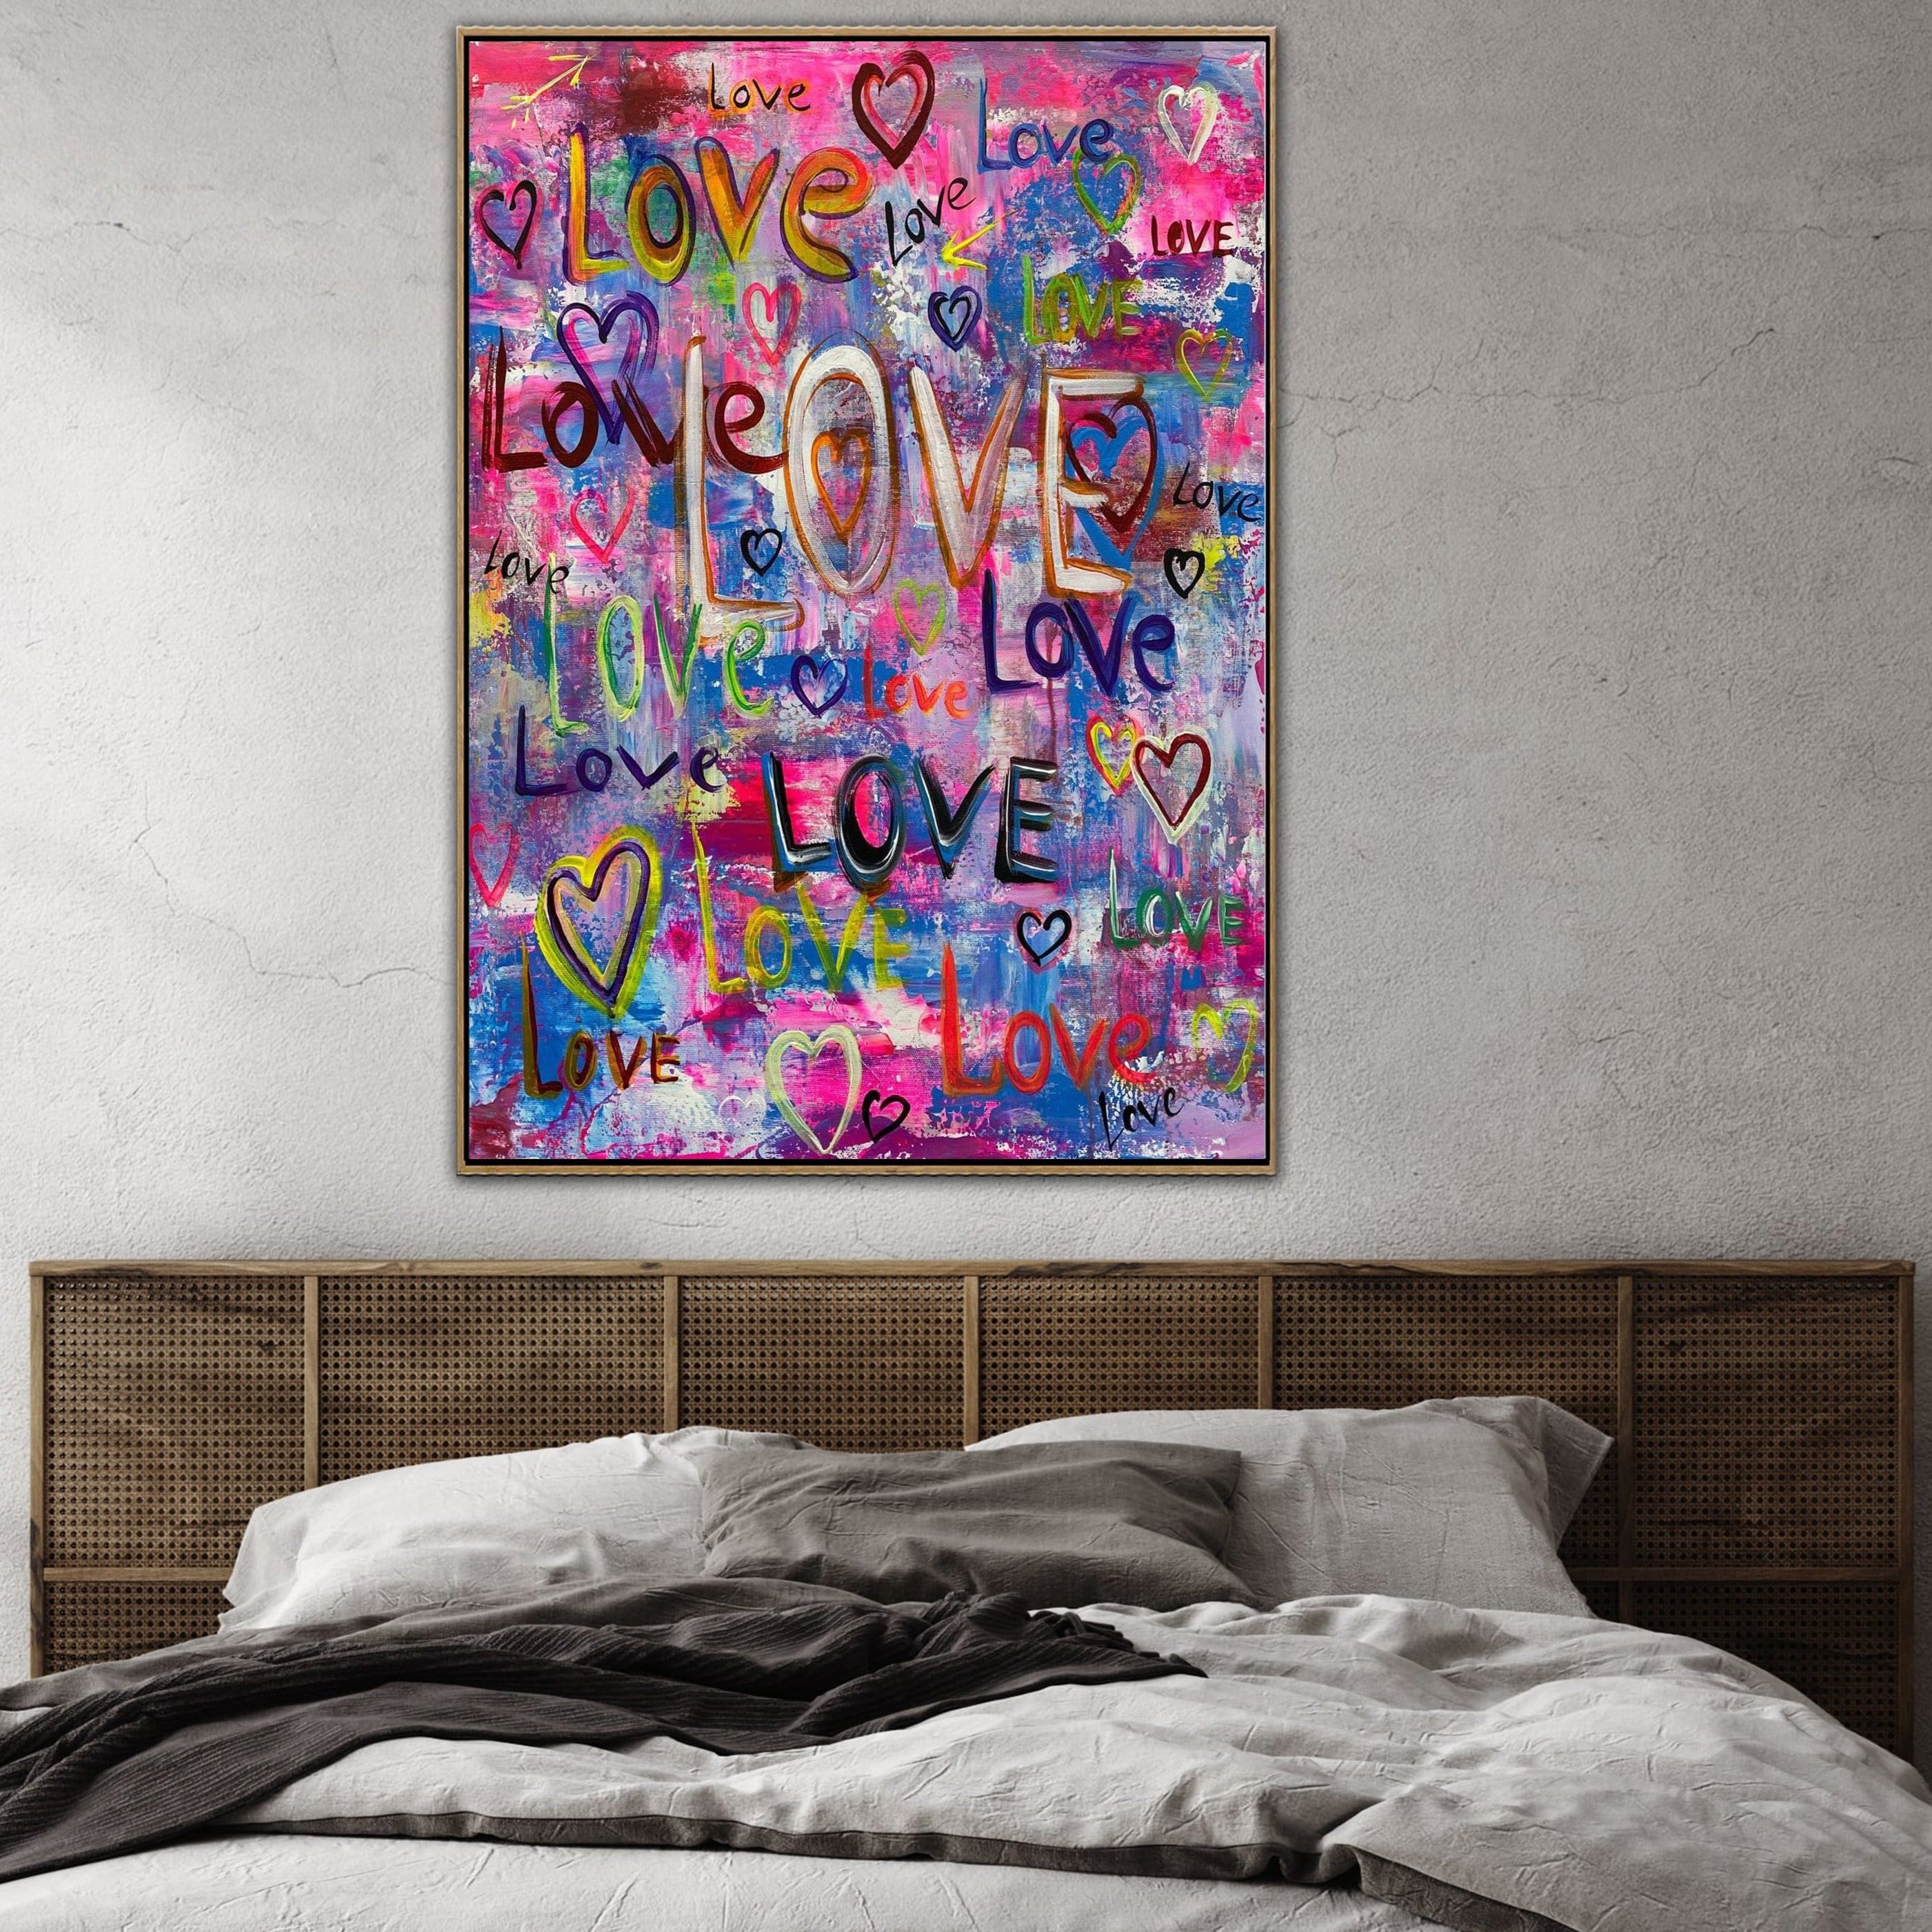 How to hang paintings in bedroom slider2-image-1